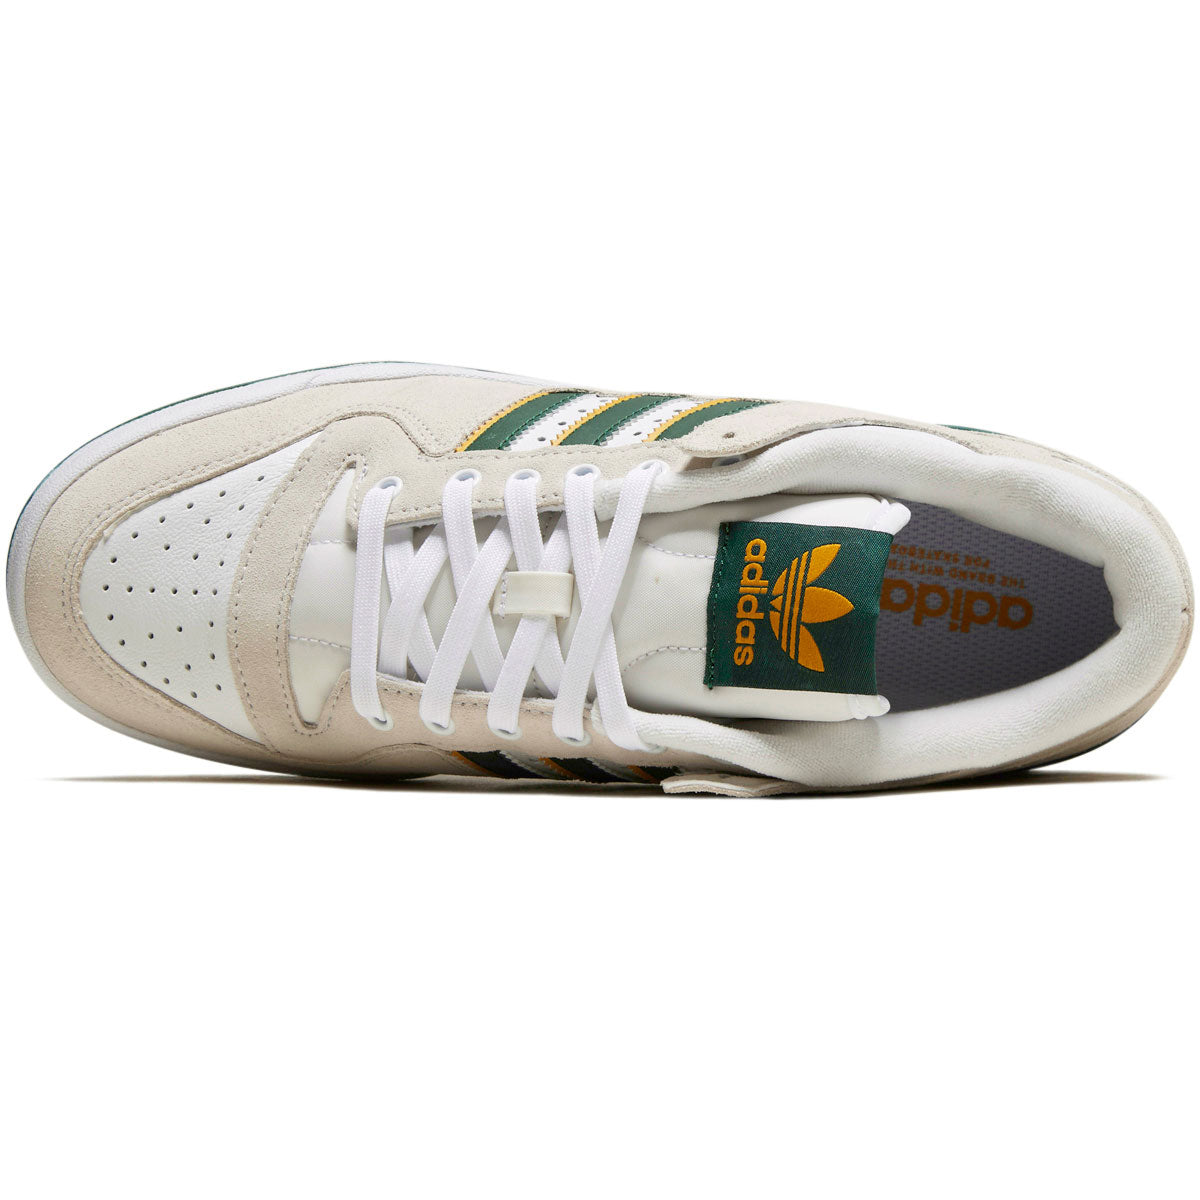 Adidas Forum 84 Low ADV Shoes - Crystal White/Dark Green/Preloved Yellow image 3